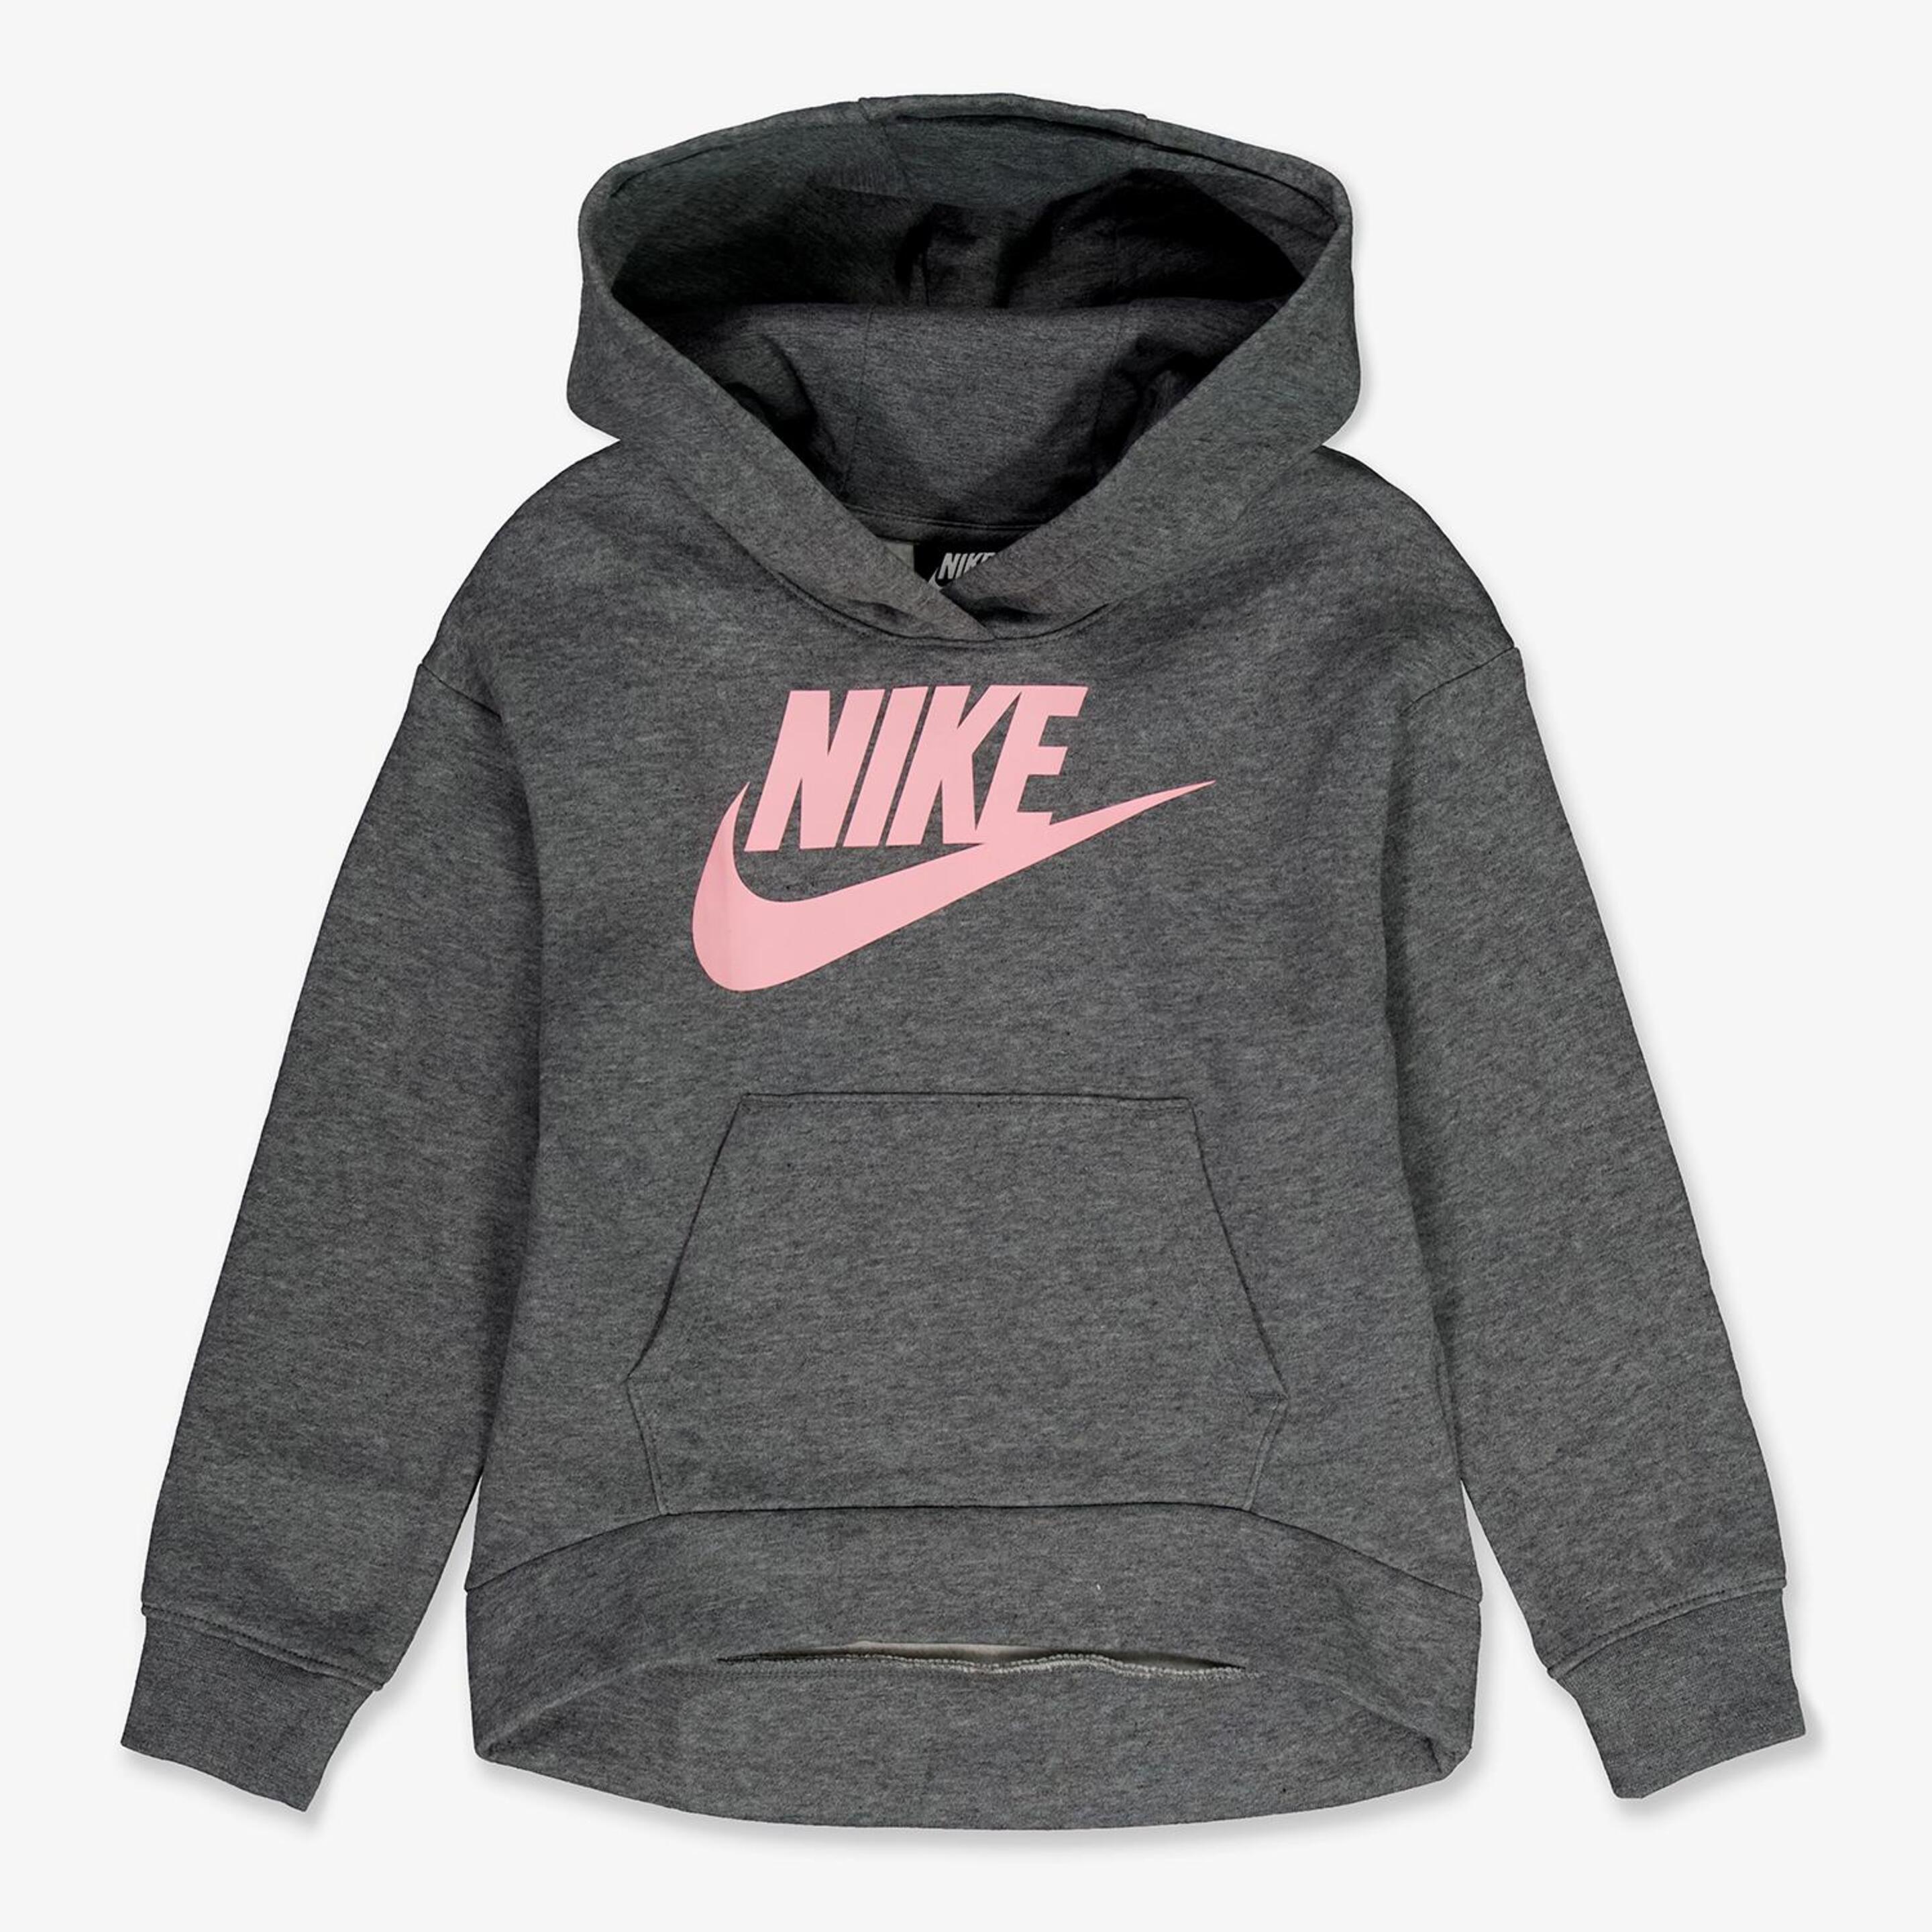 Sweatshirt Nike - gris - Sweatshirt Capuz Menina